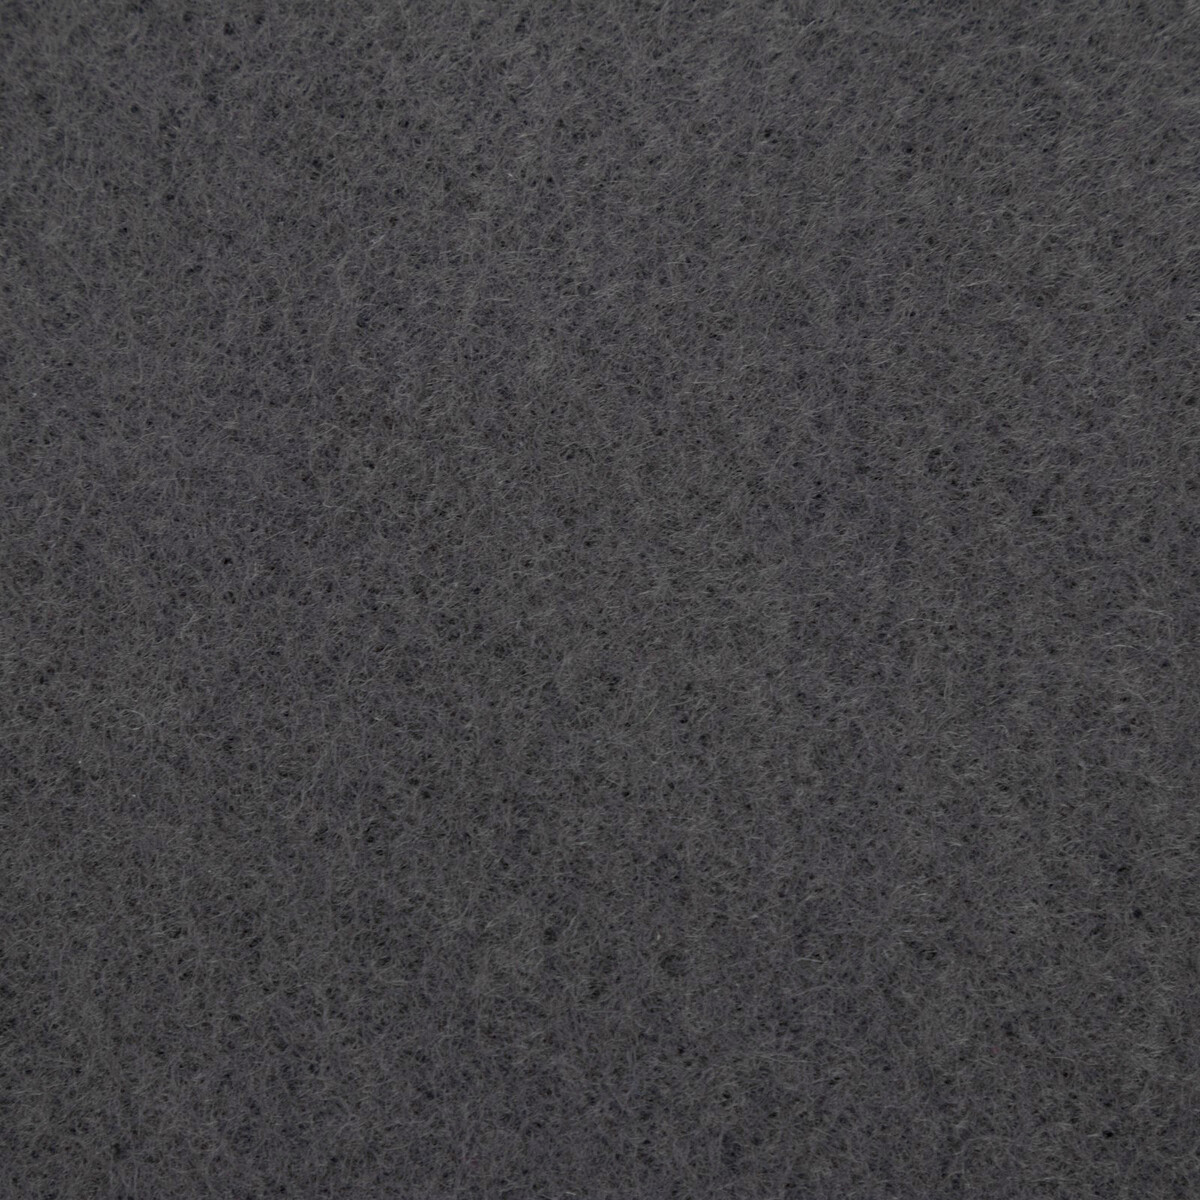 Плед Экономь и Я, цвет серый, размер 130х150 см 03309302 - фото 2